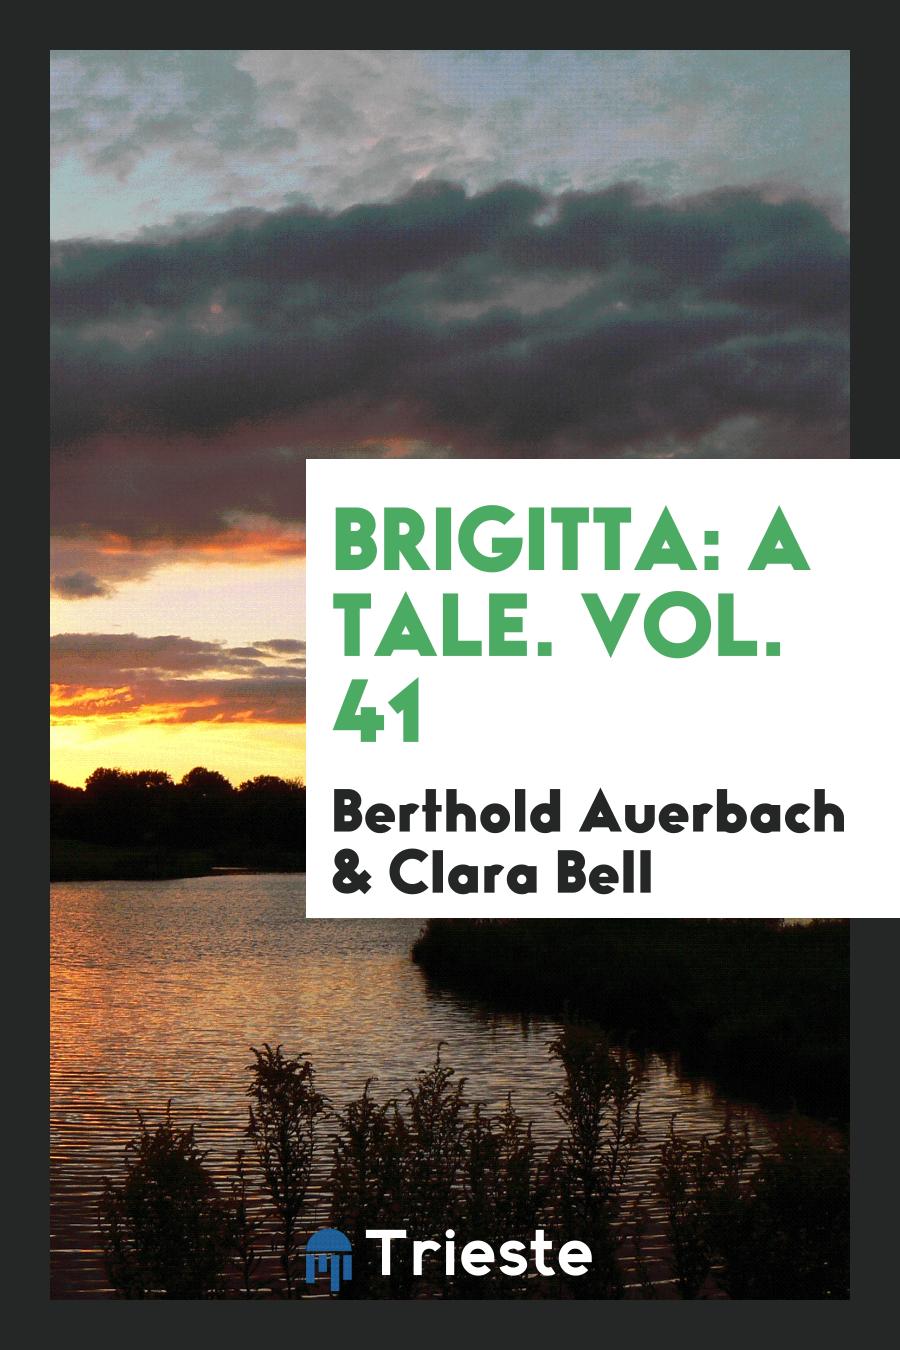 Brigitta: A tale. Vol. 41